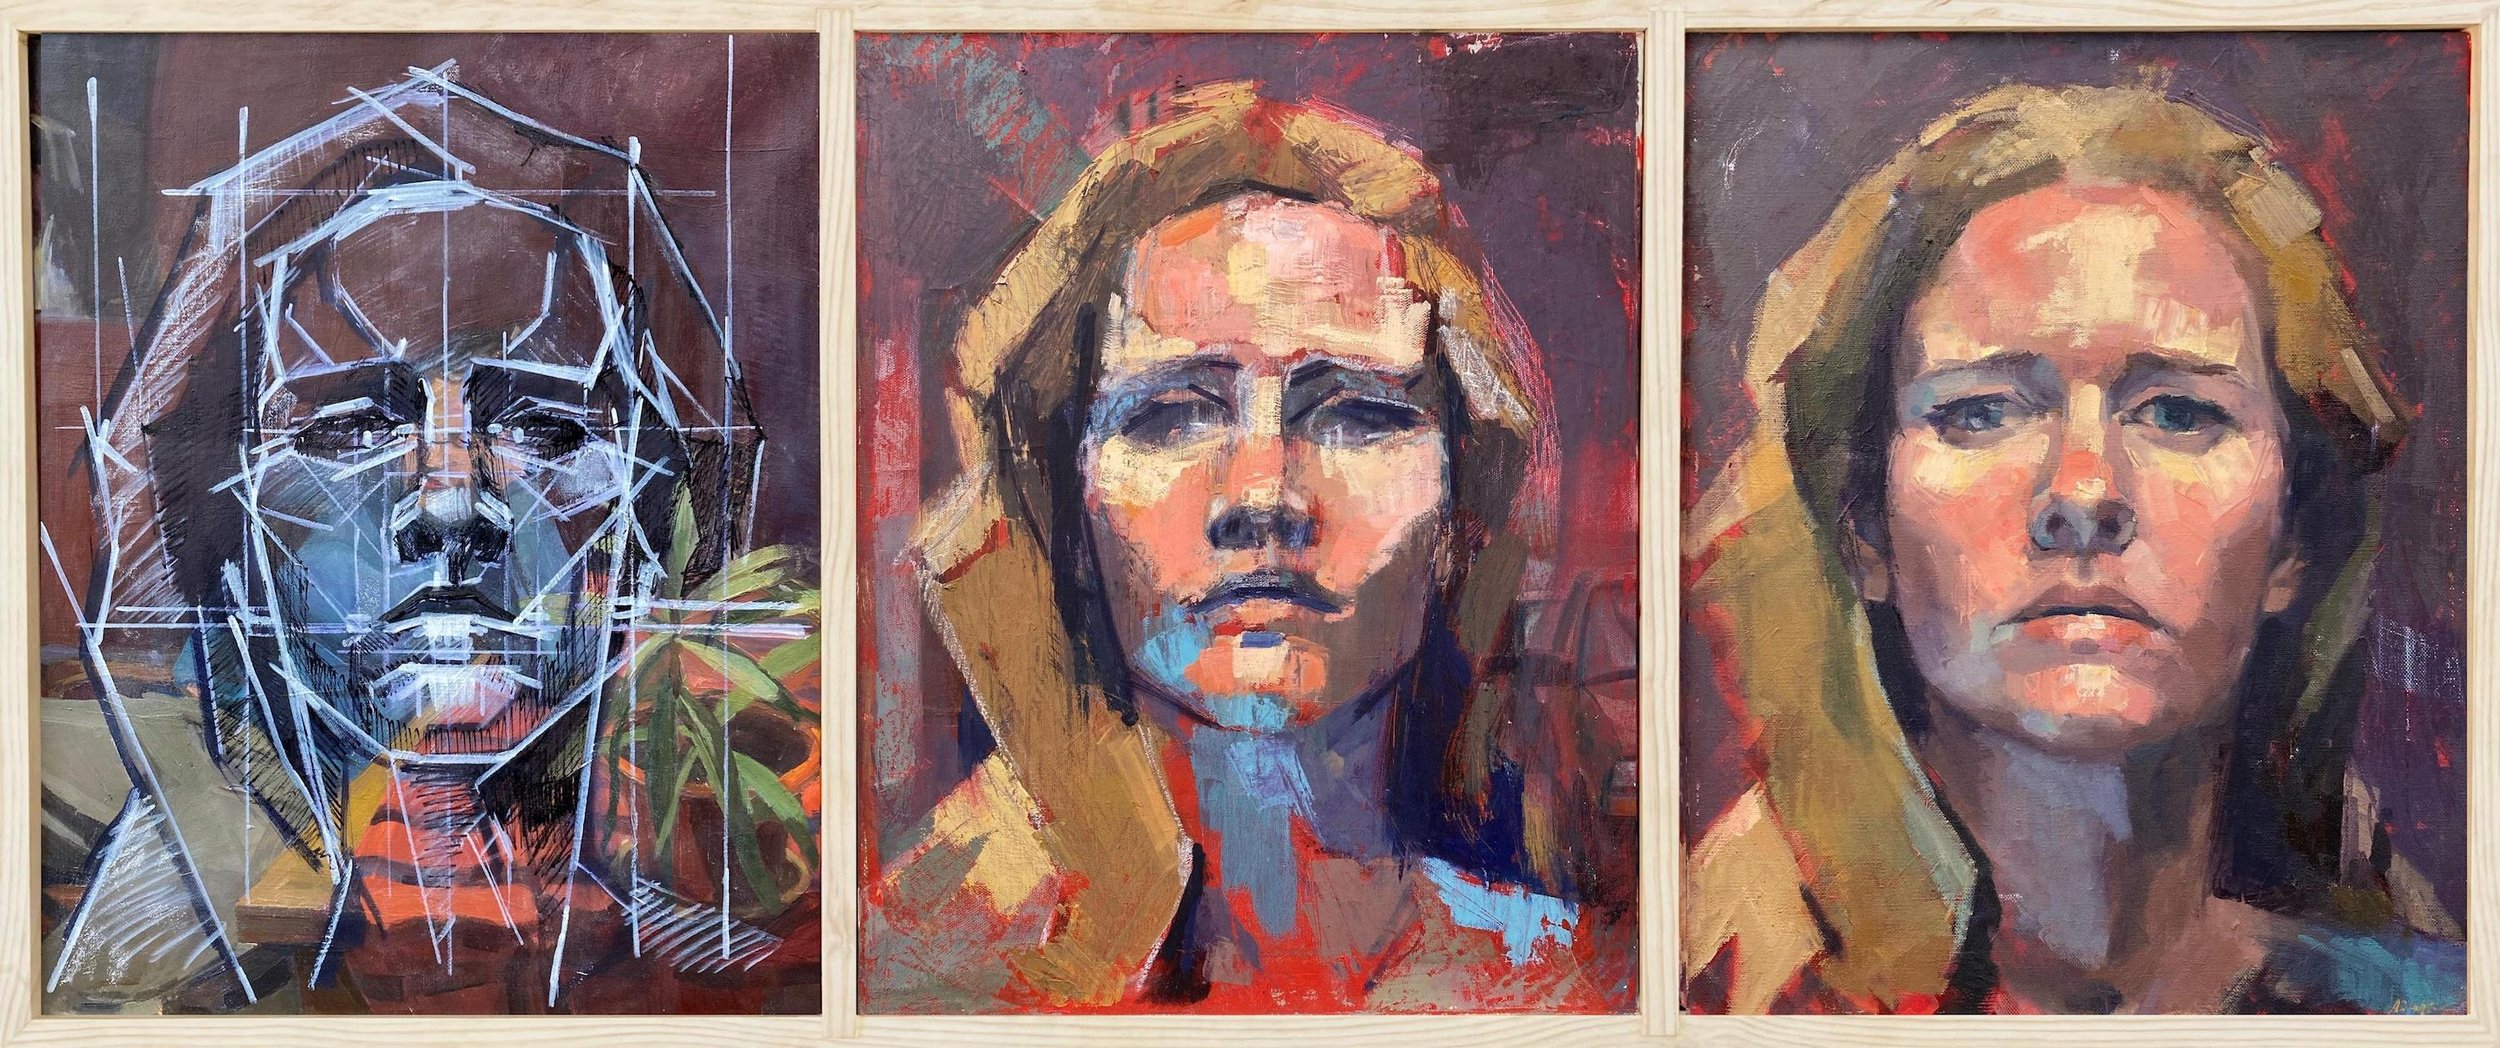    Metamorphosis  , 20” x 50”, triptych, oil on canvas 